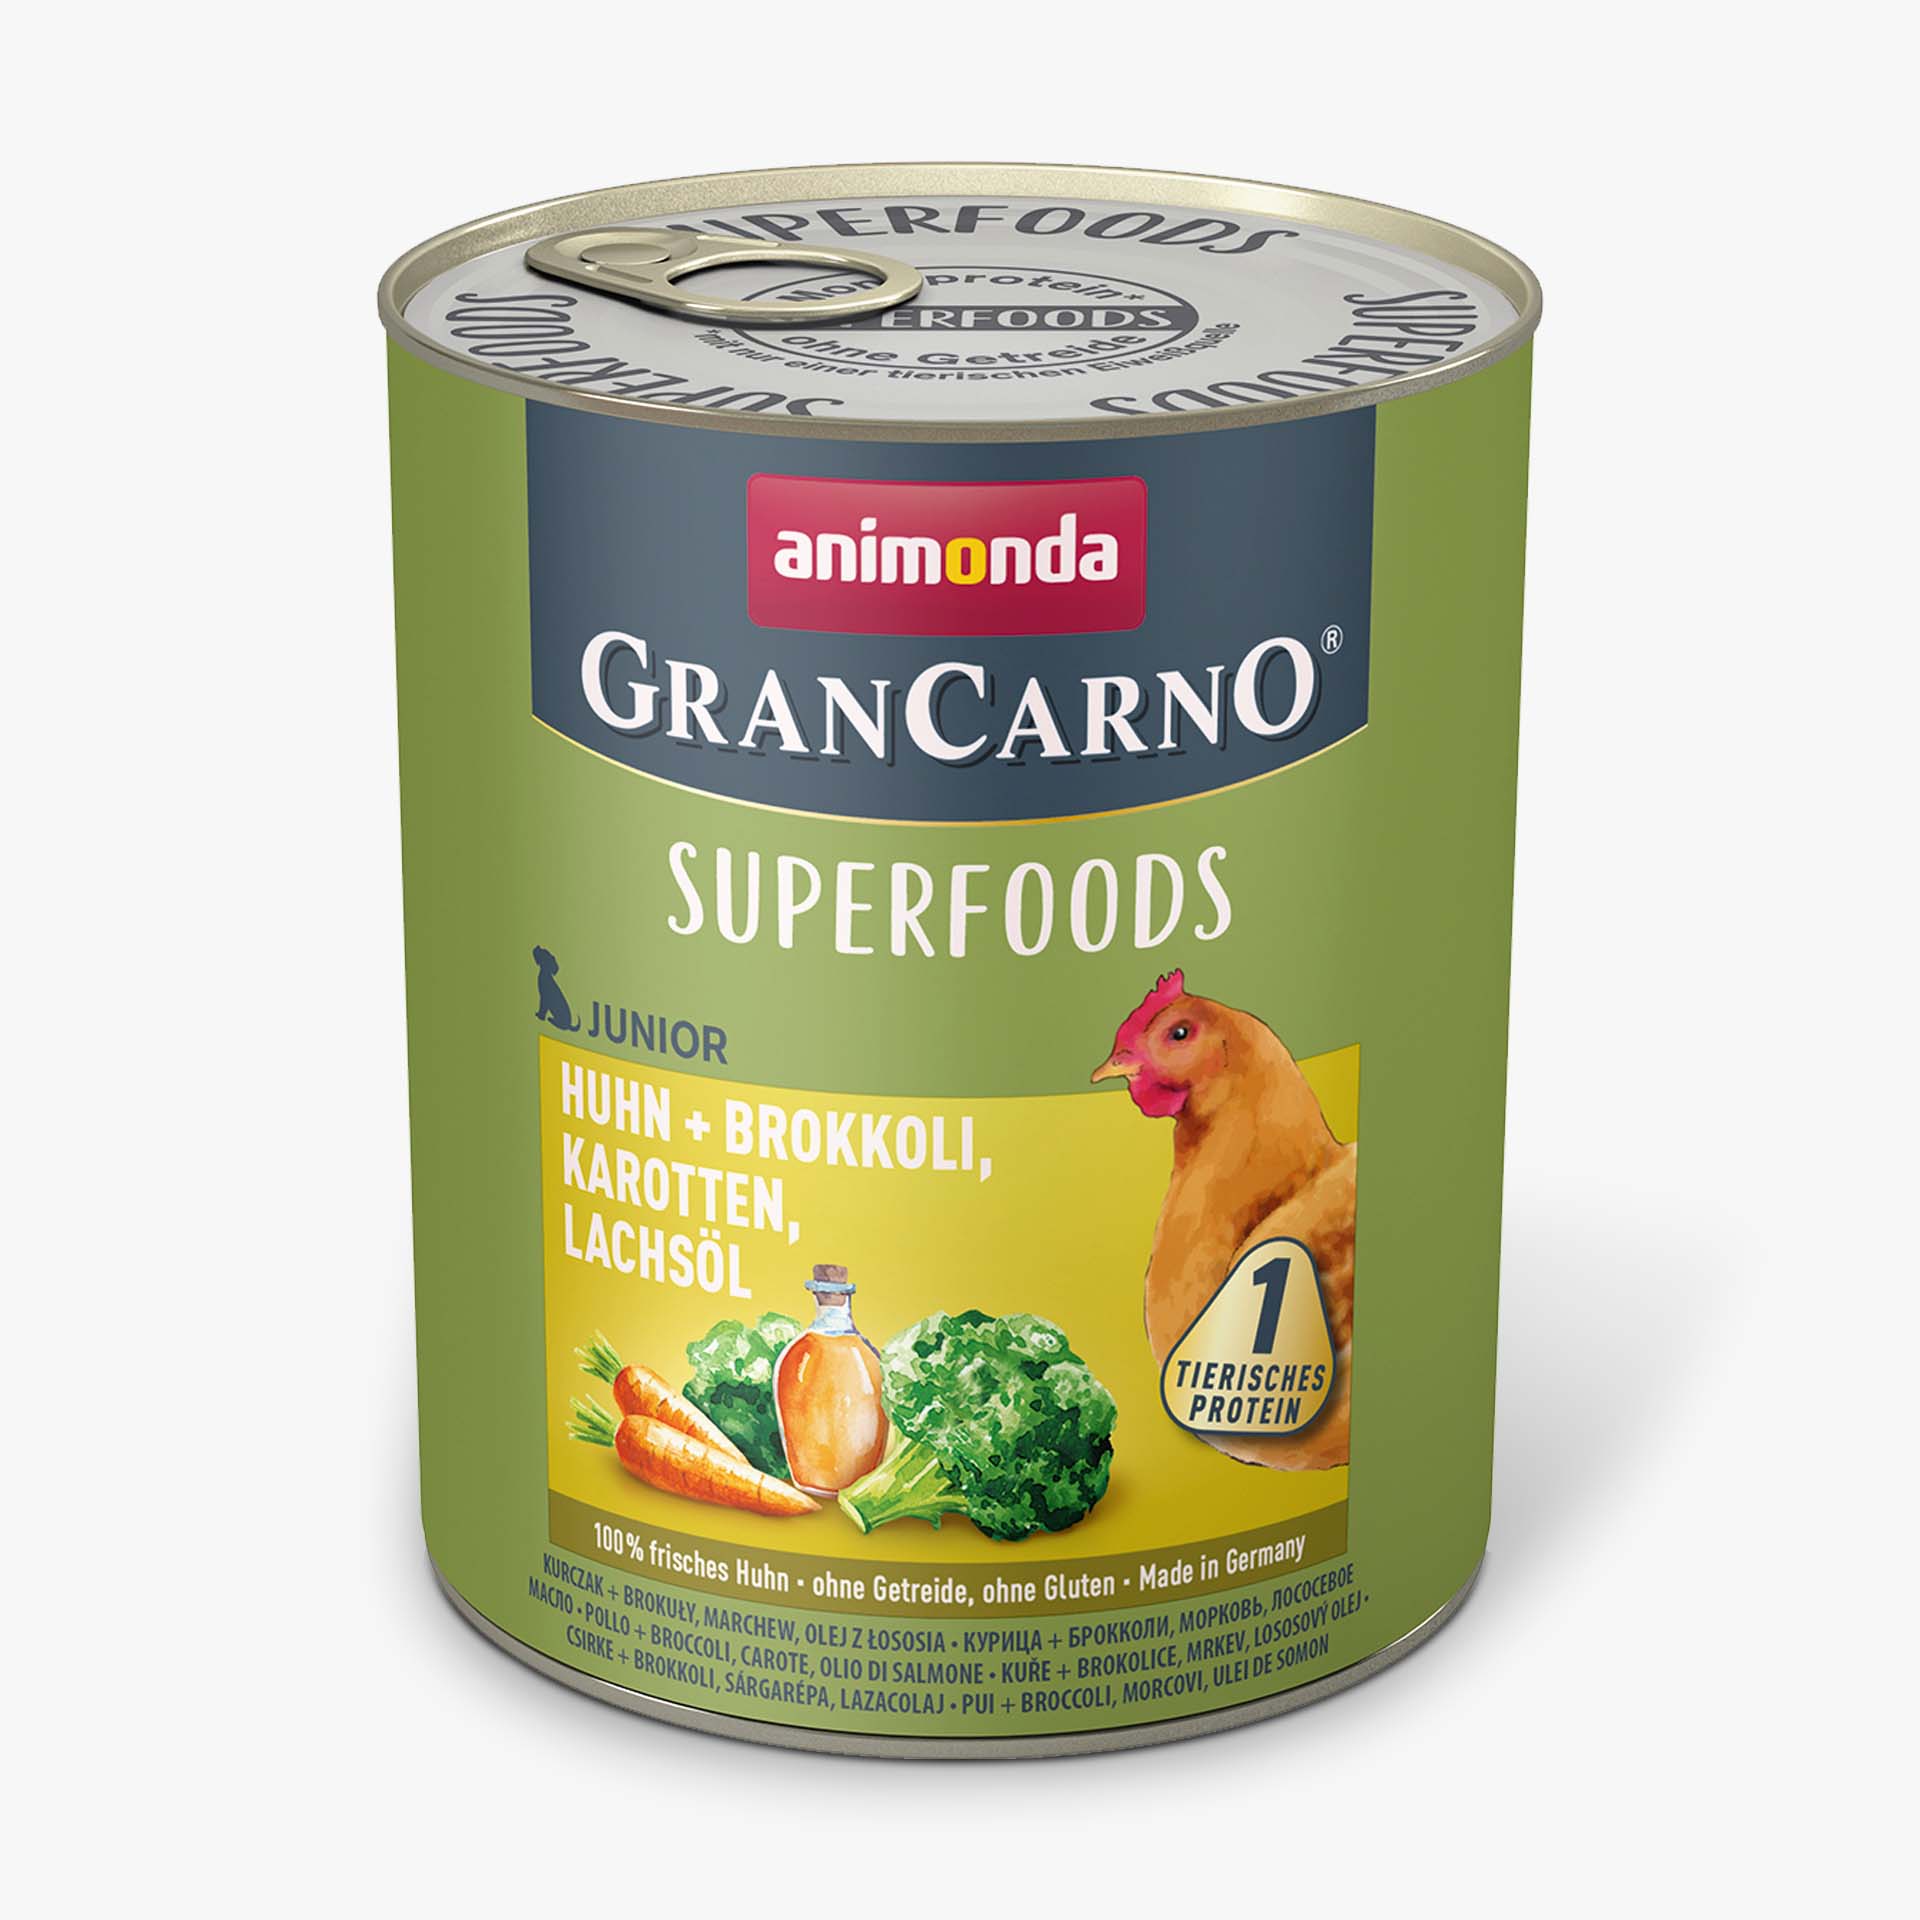 GranCarno chicken + broccoli, carrots, salmon oil Superfoods